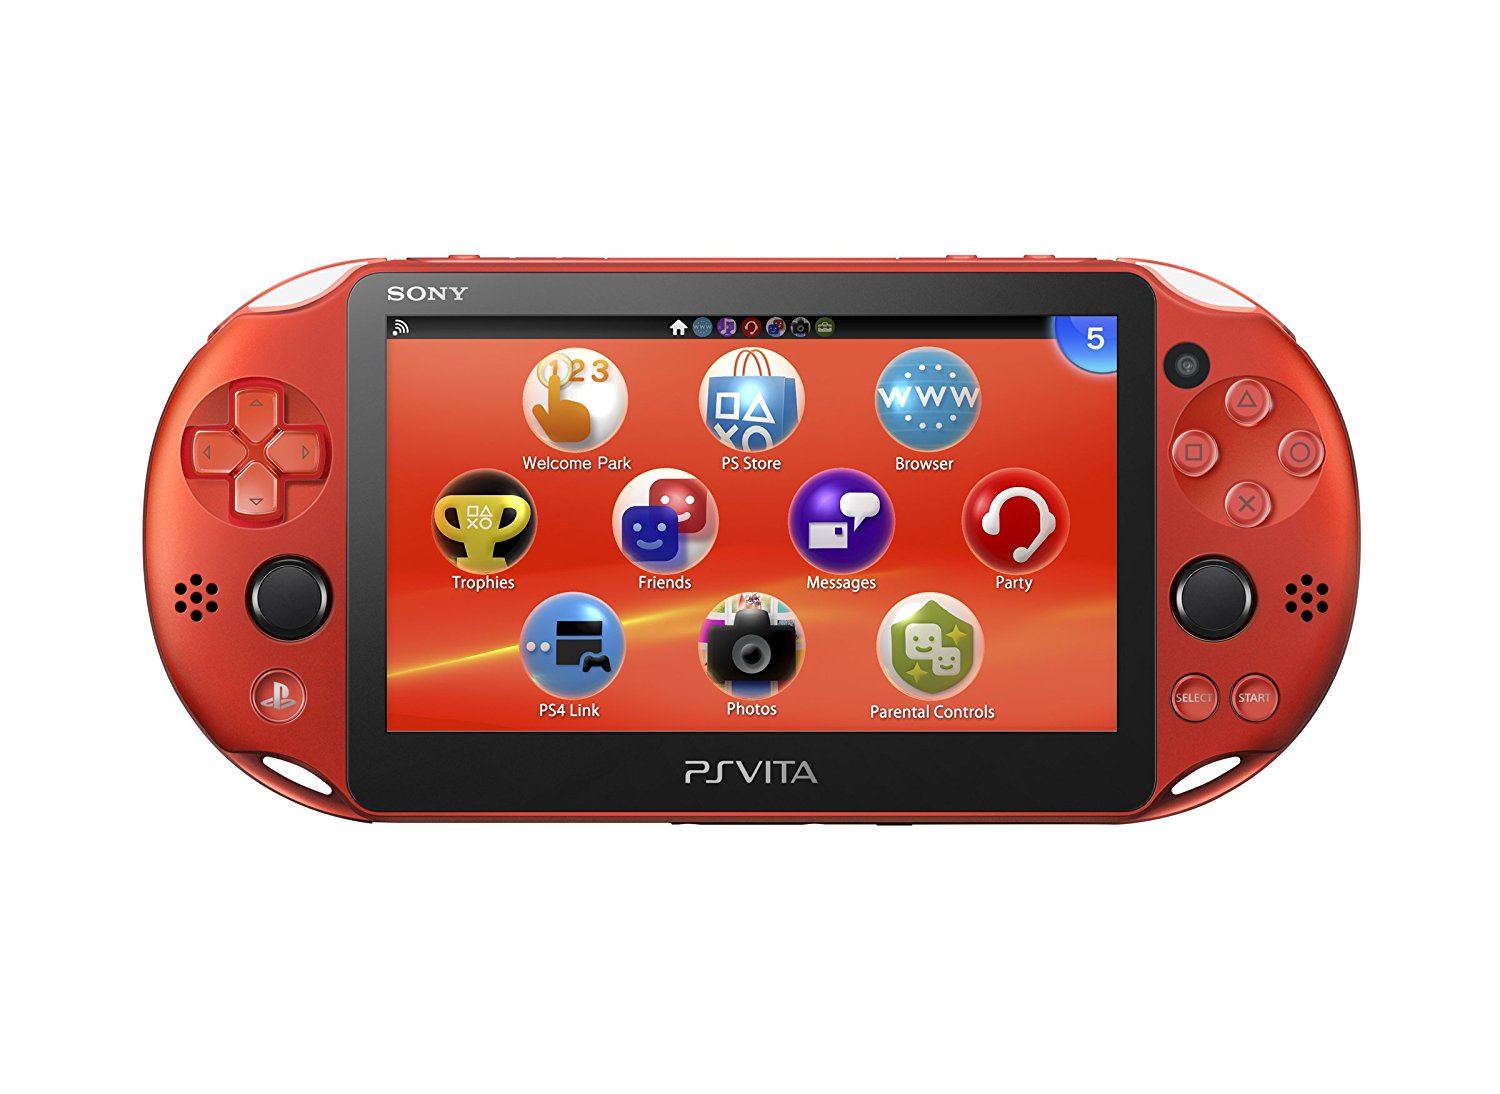 PS Vita PlayStation Vita New Slim Model - PCH-2000 (Metallic Red) (Japan)